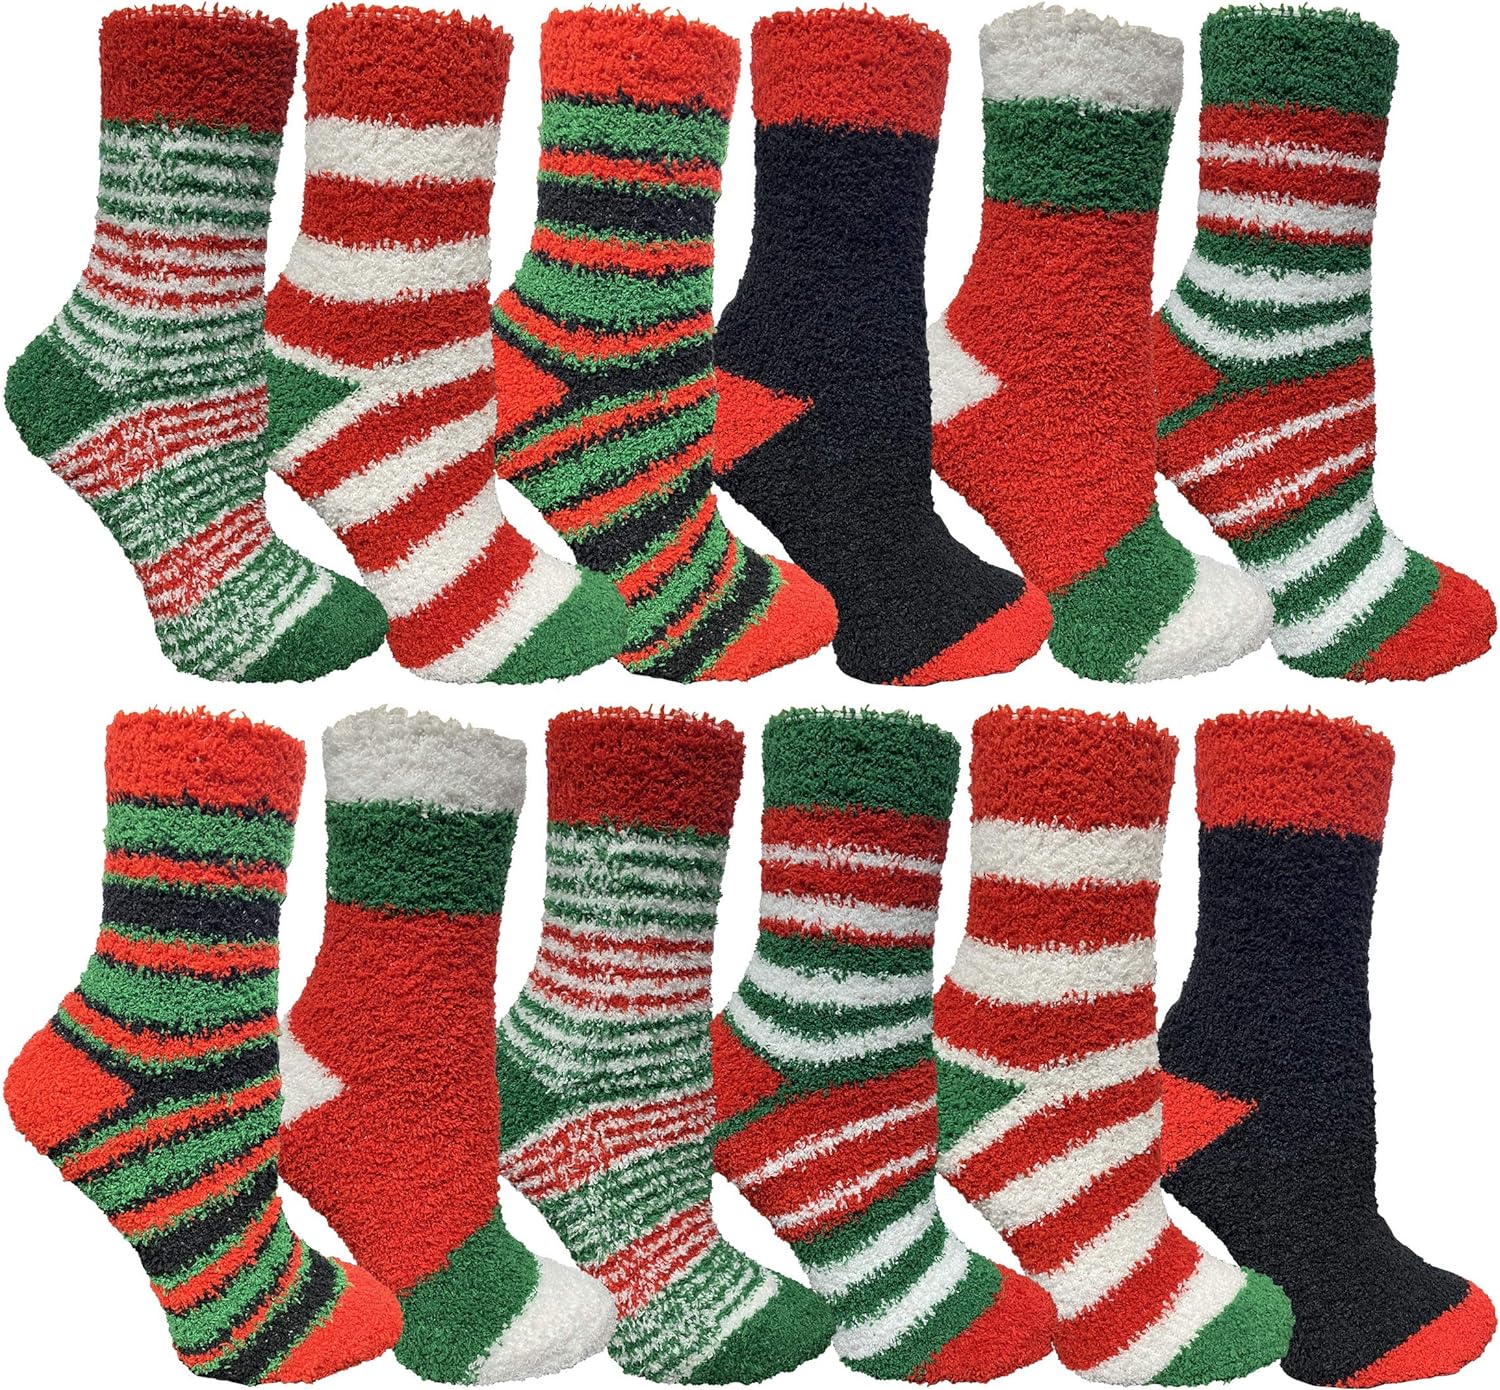 Yacht & Smith Christmas Socks, Colorful Patterns and Stripes, , Holiday Slipper Sock, Fuzzy, Bulk Gift (12 Pairs Fuzzy Socks)